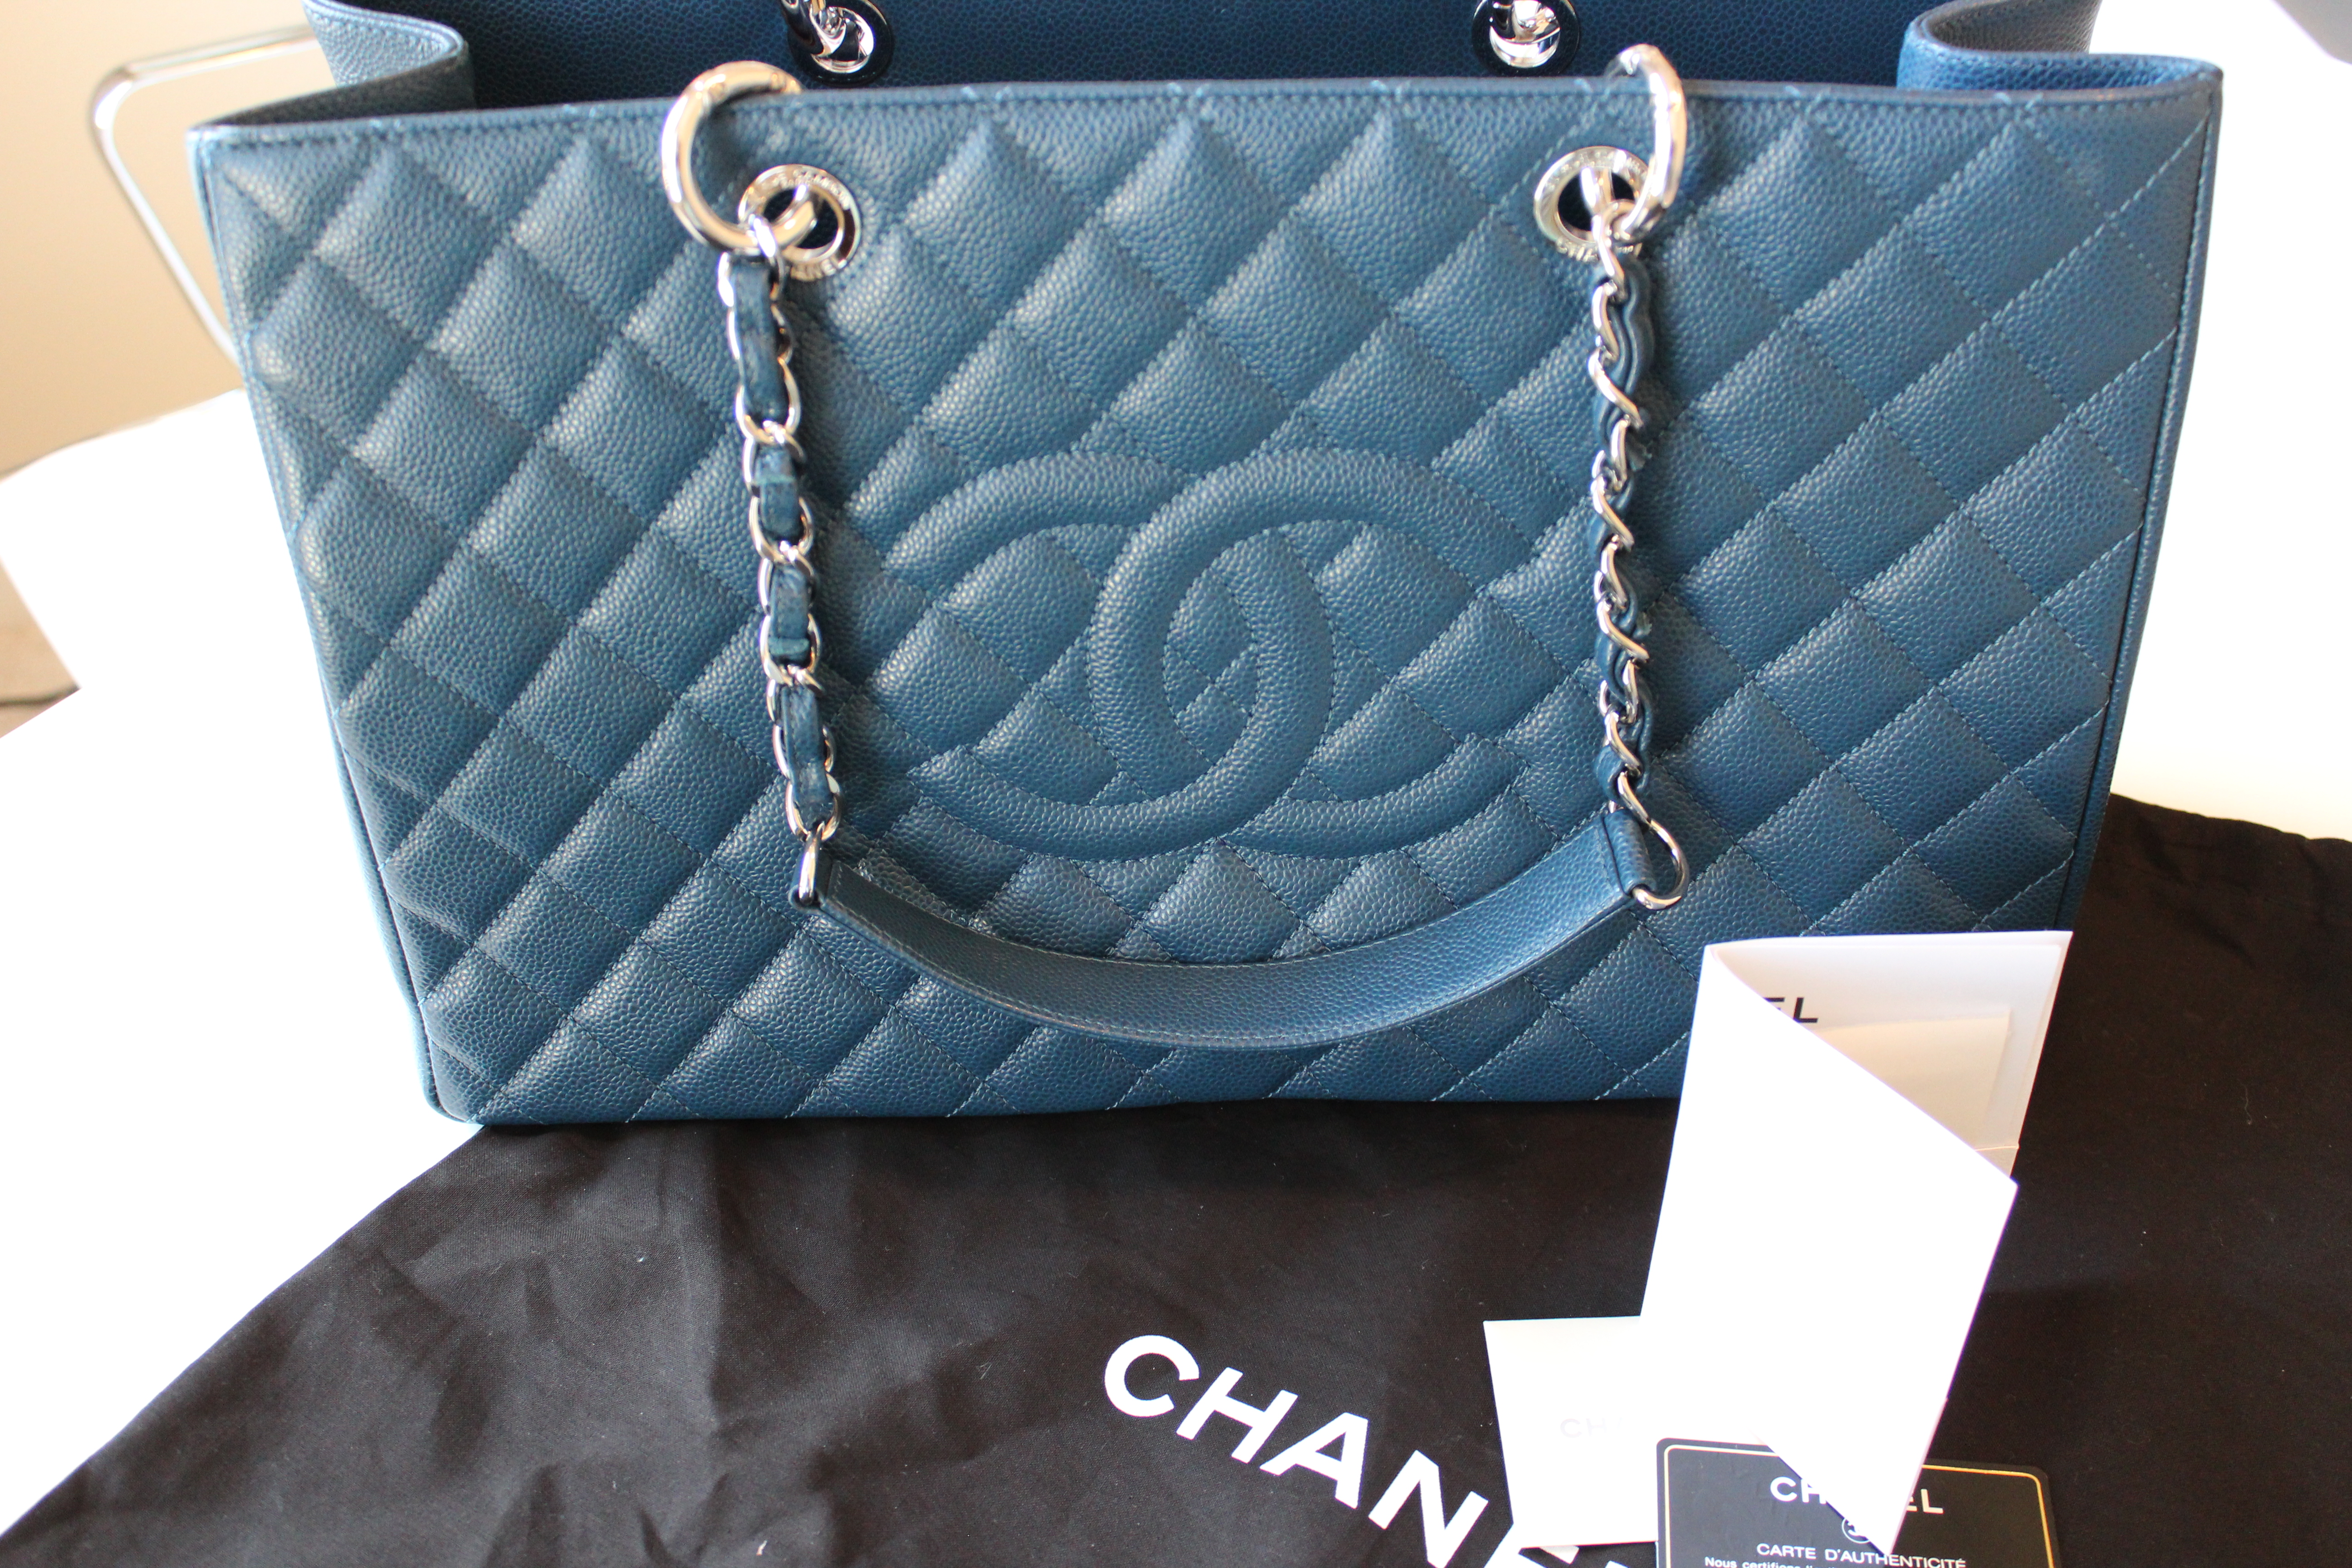 Designer Handbag Review//Chanel XL Grand Shopping Tote